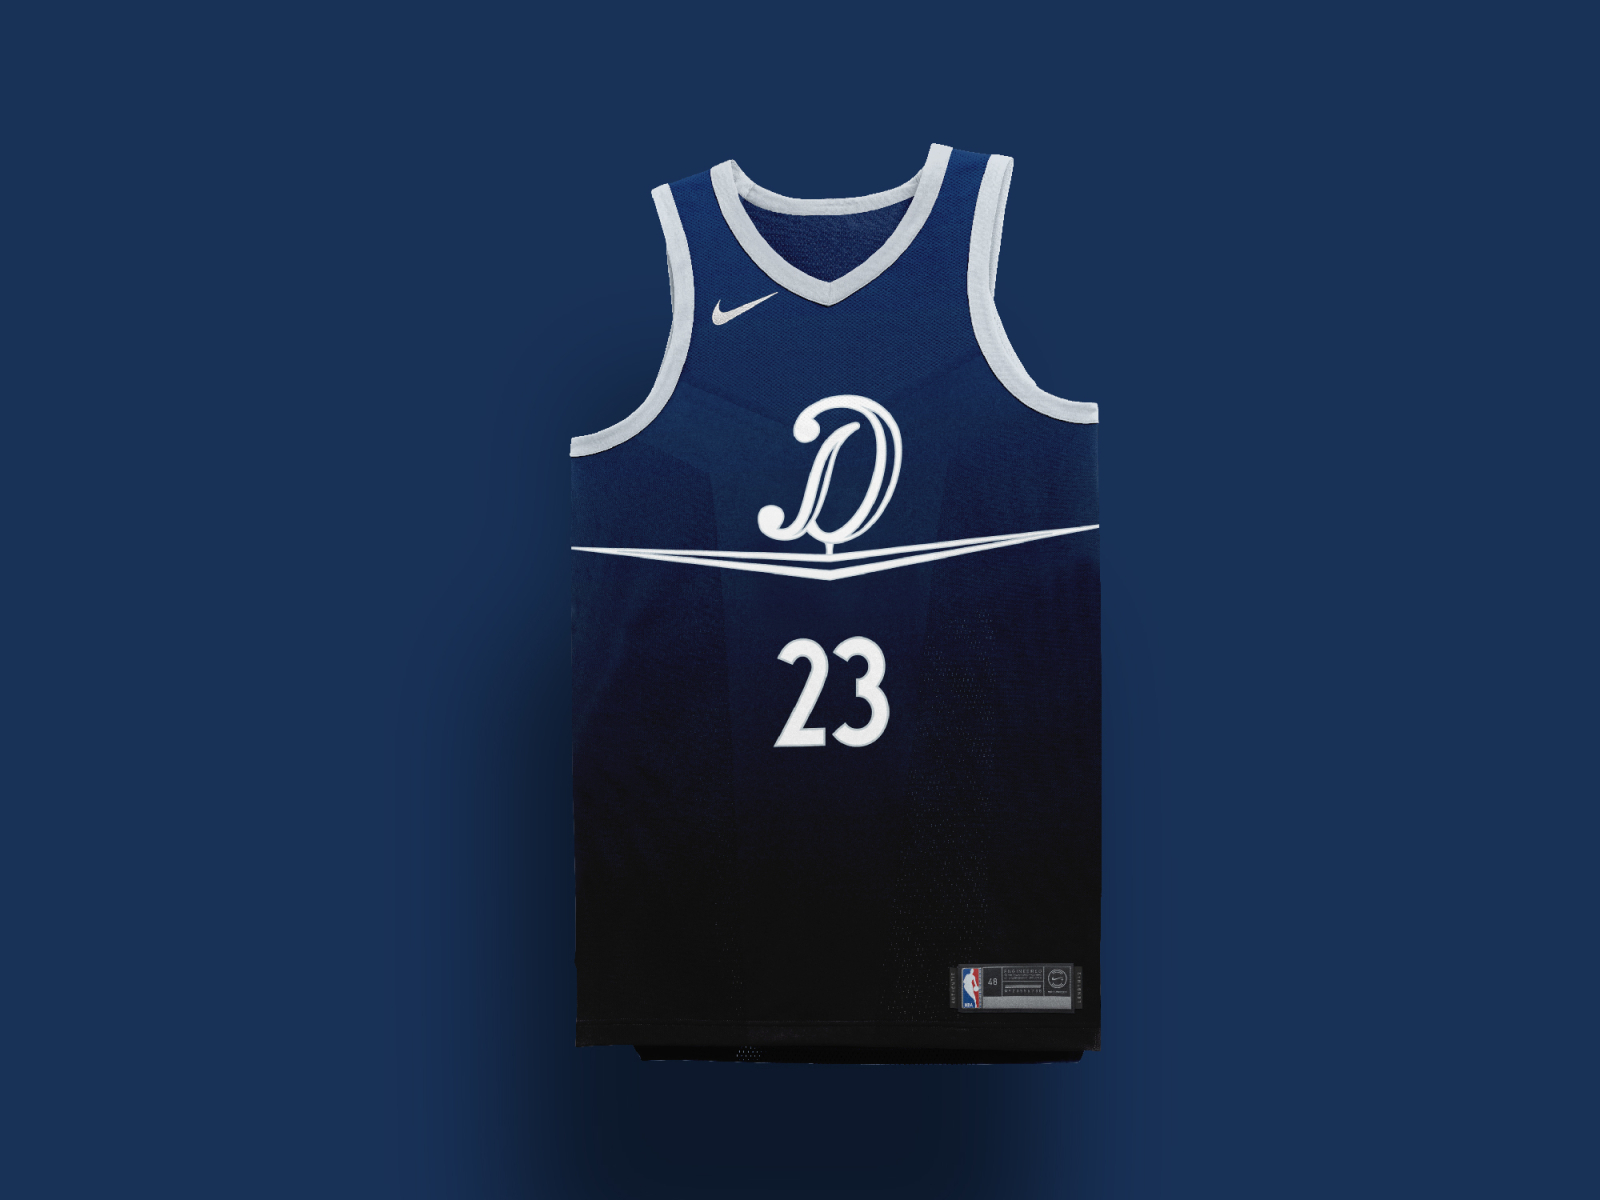 Detroit Pistons Alternate Jersey Design by Brian Rottman on Dribbble